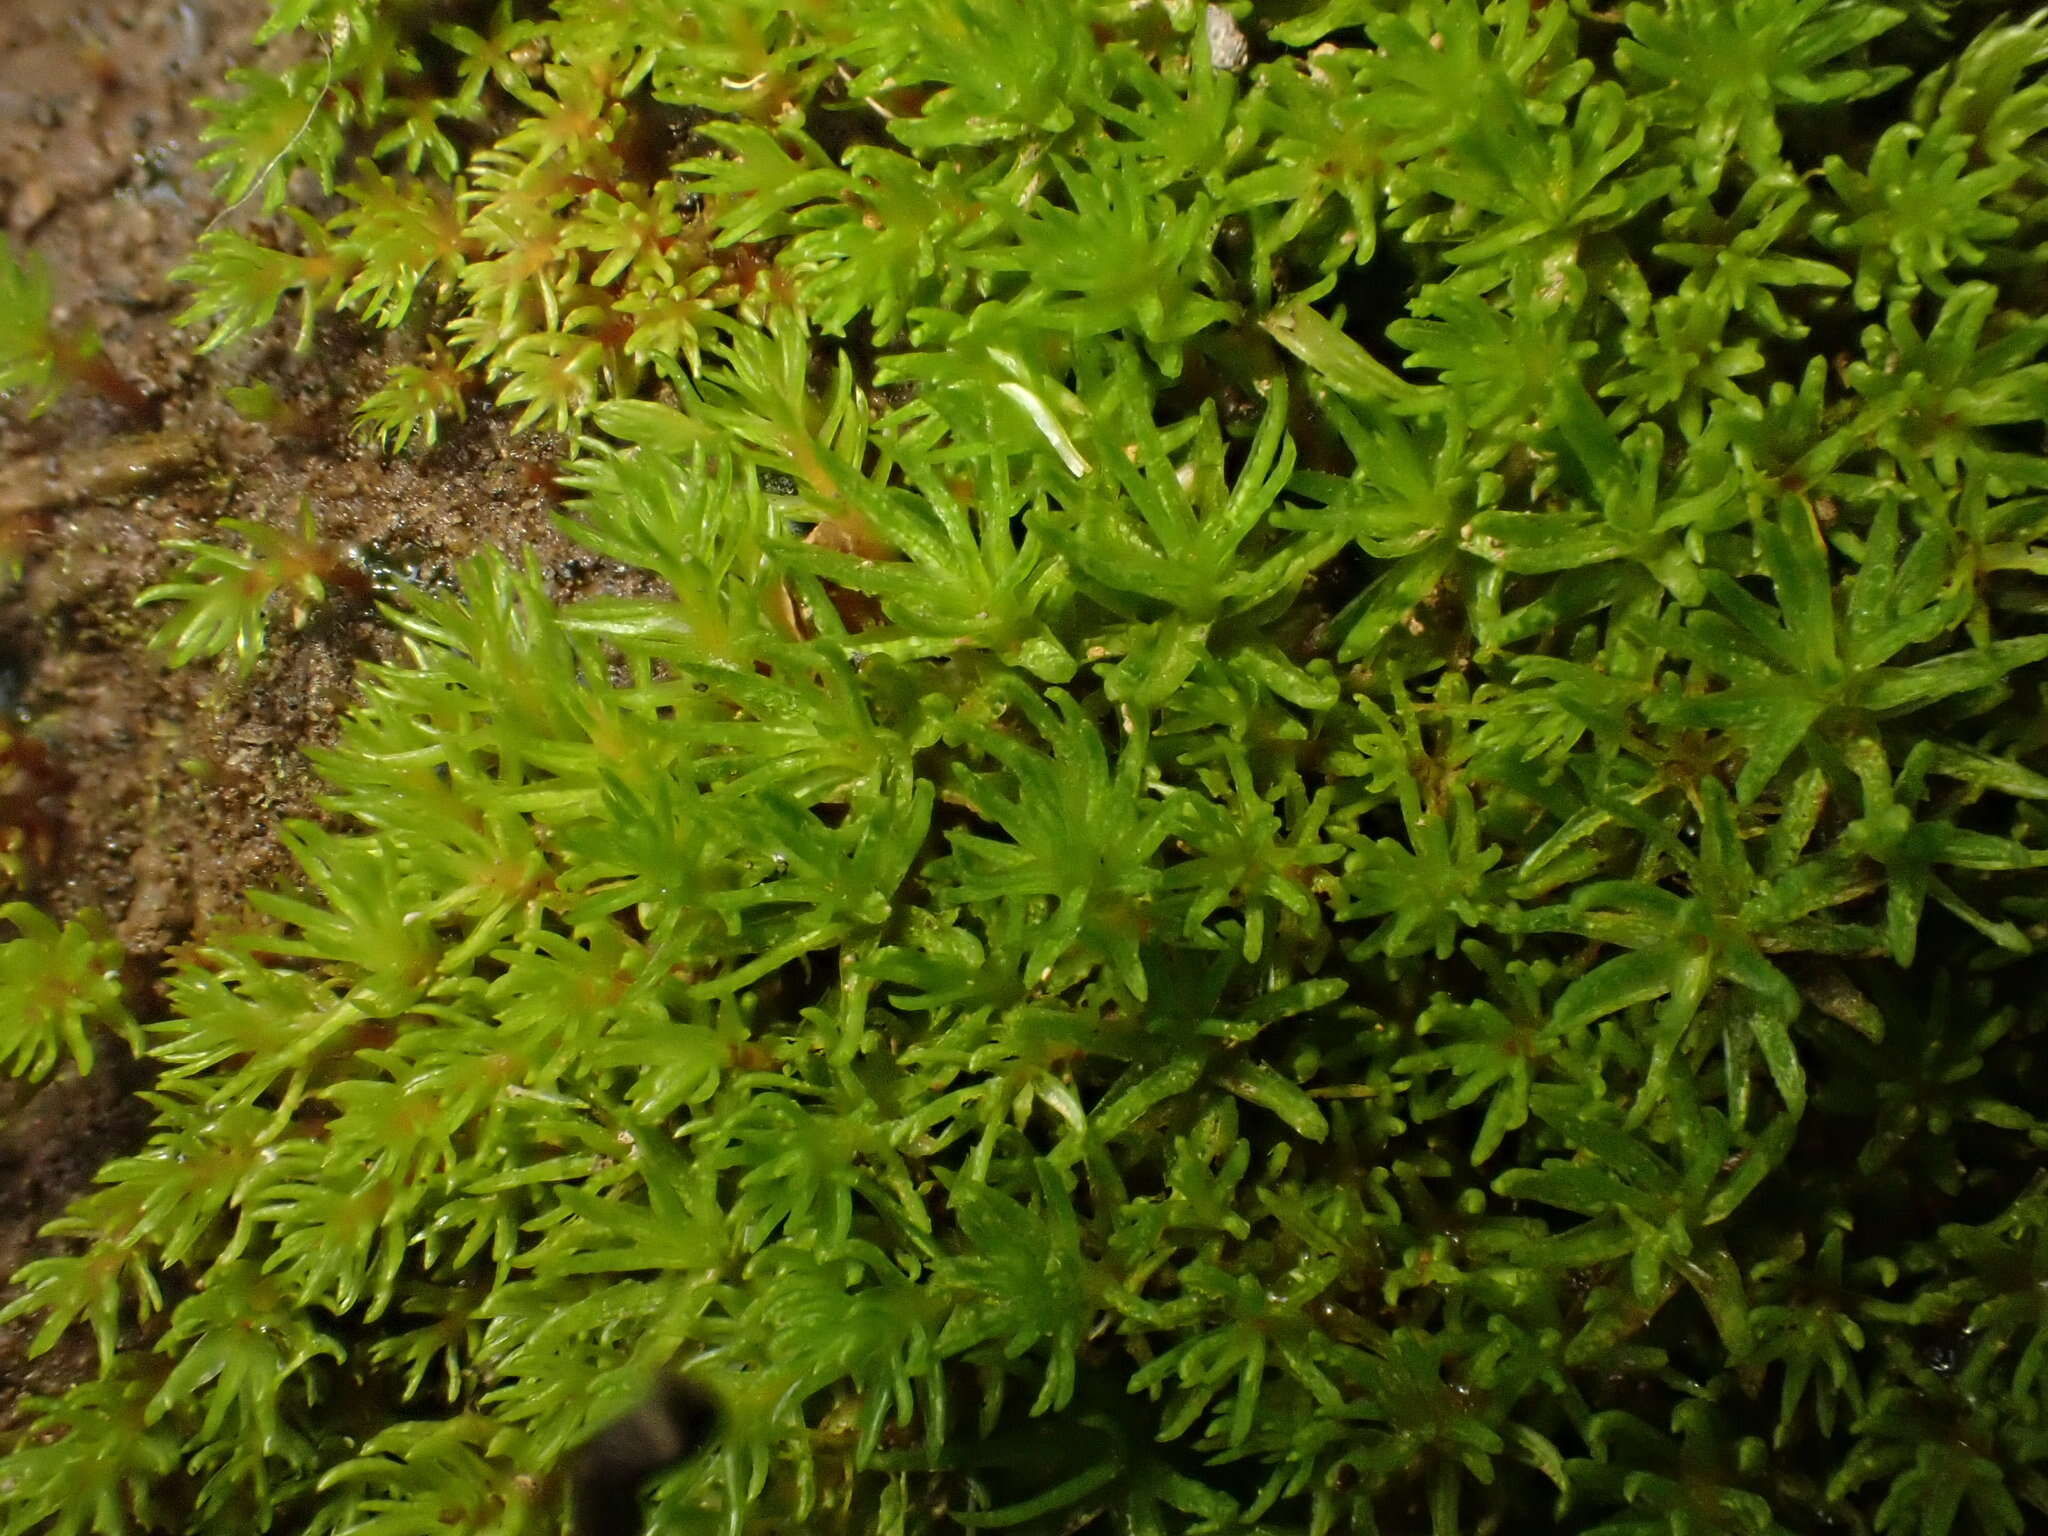 Image of oligotrichum moss